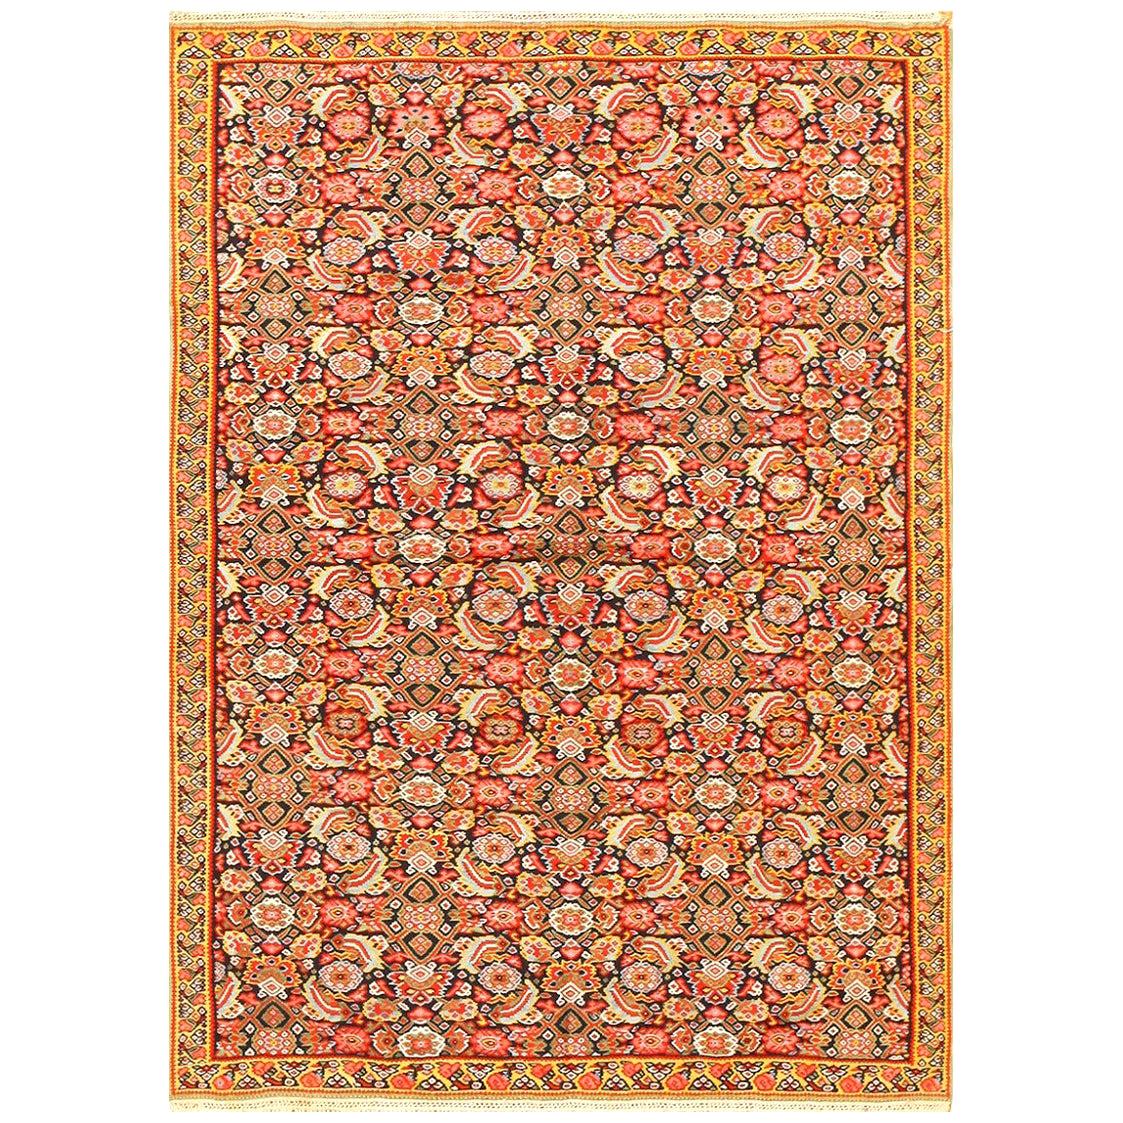 Small Fine Antique Persian Senneh Kilim Rug. Size: 3 ft x 4 ft (0.91 m x 1.22 m)